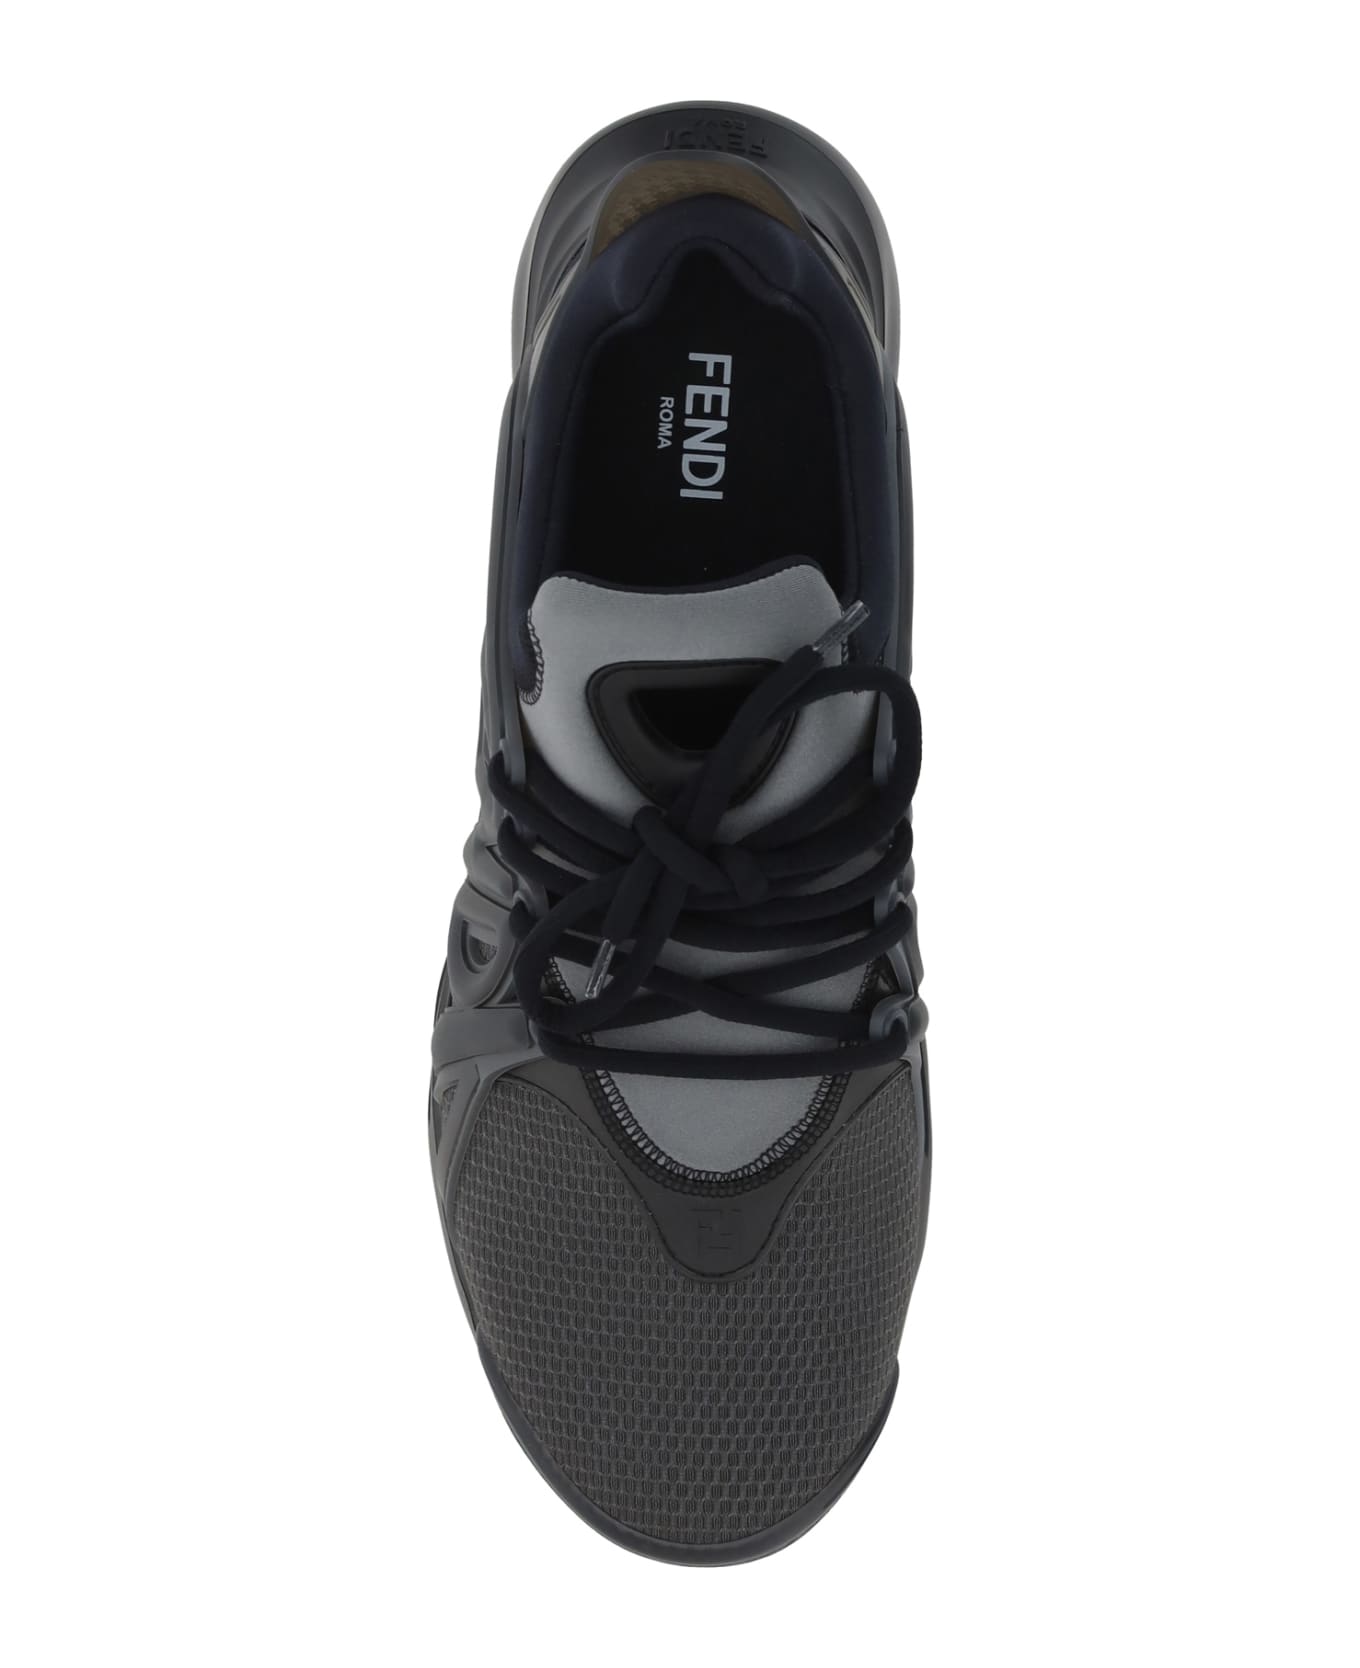 Fendi Sneakers - Antr+grig+argill Ner スニーカー